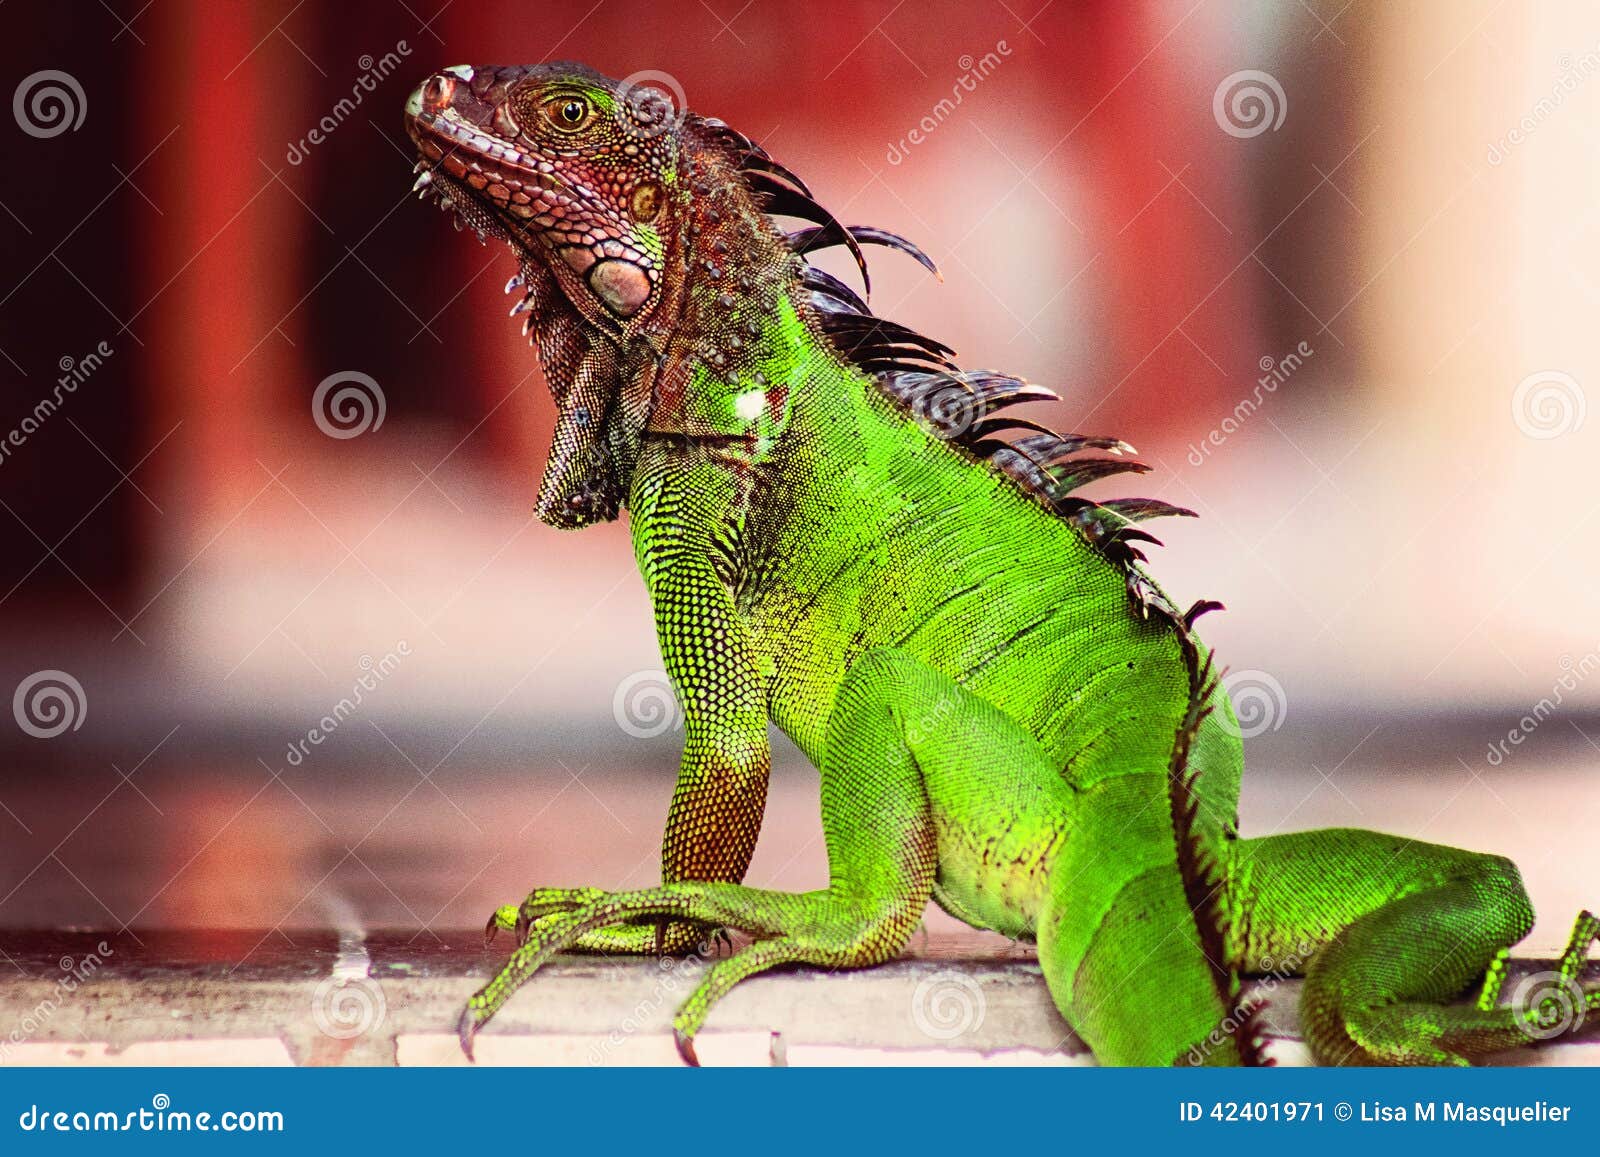 red green iguana